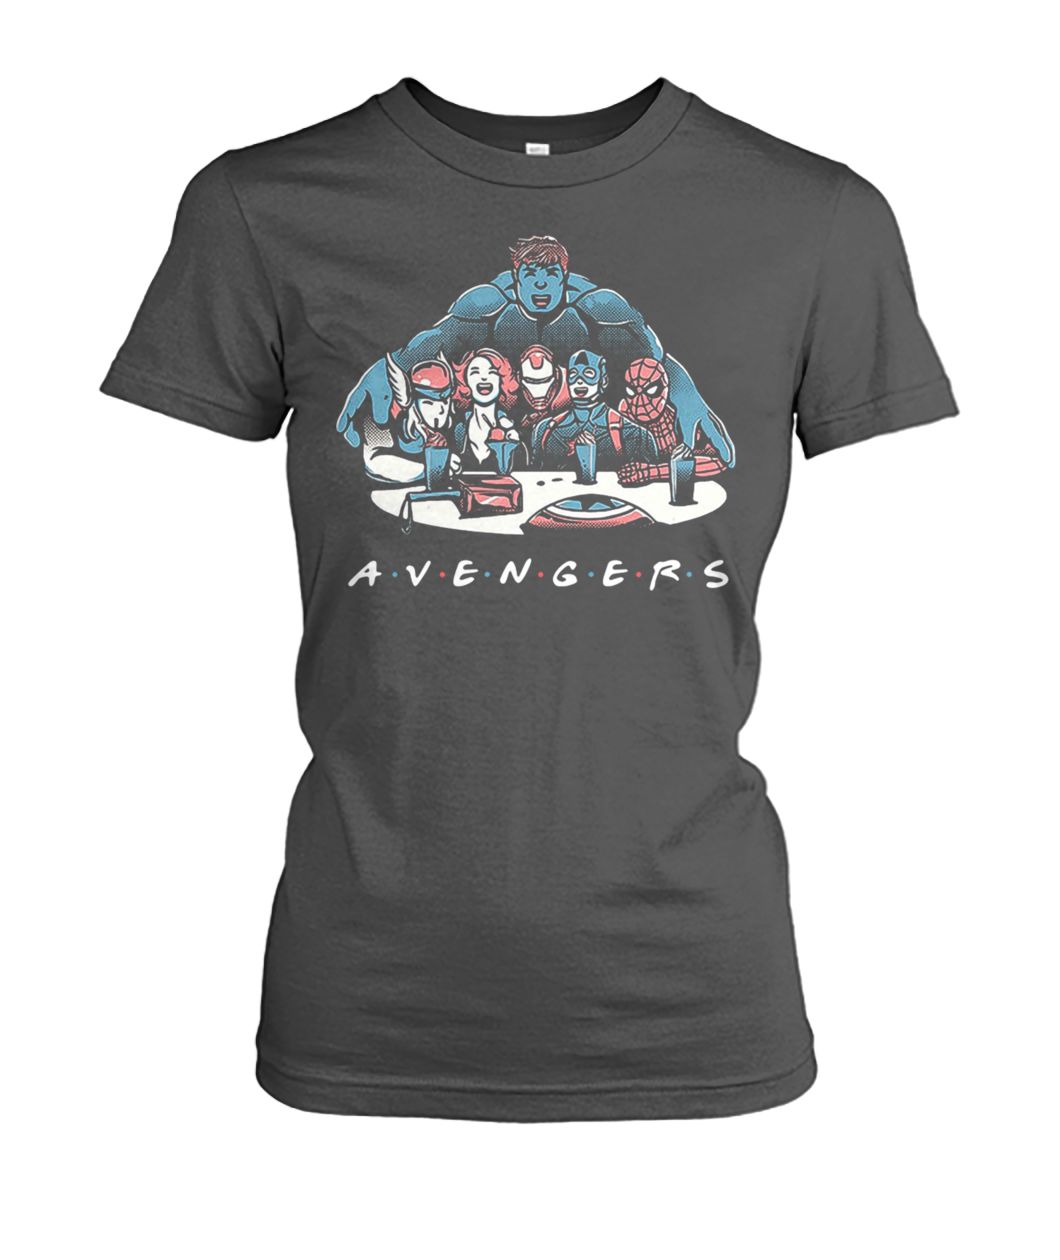 Avengers end game avengers friends women's crew tee